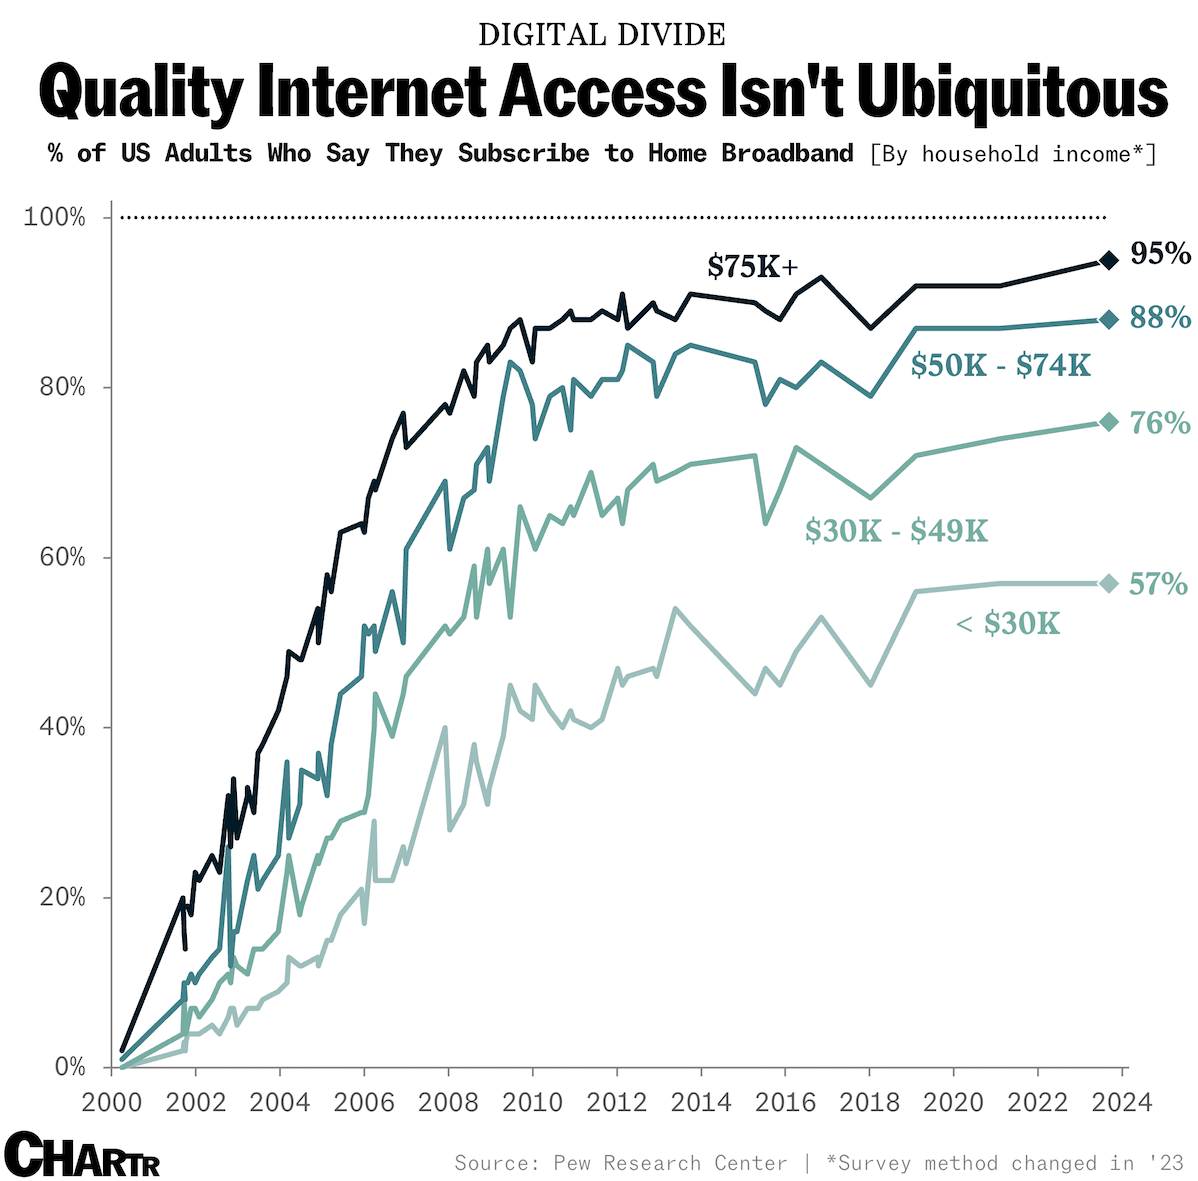 Internet access